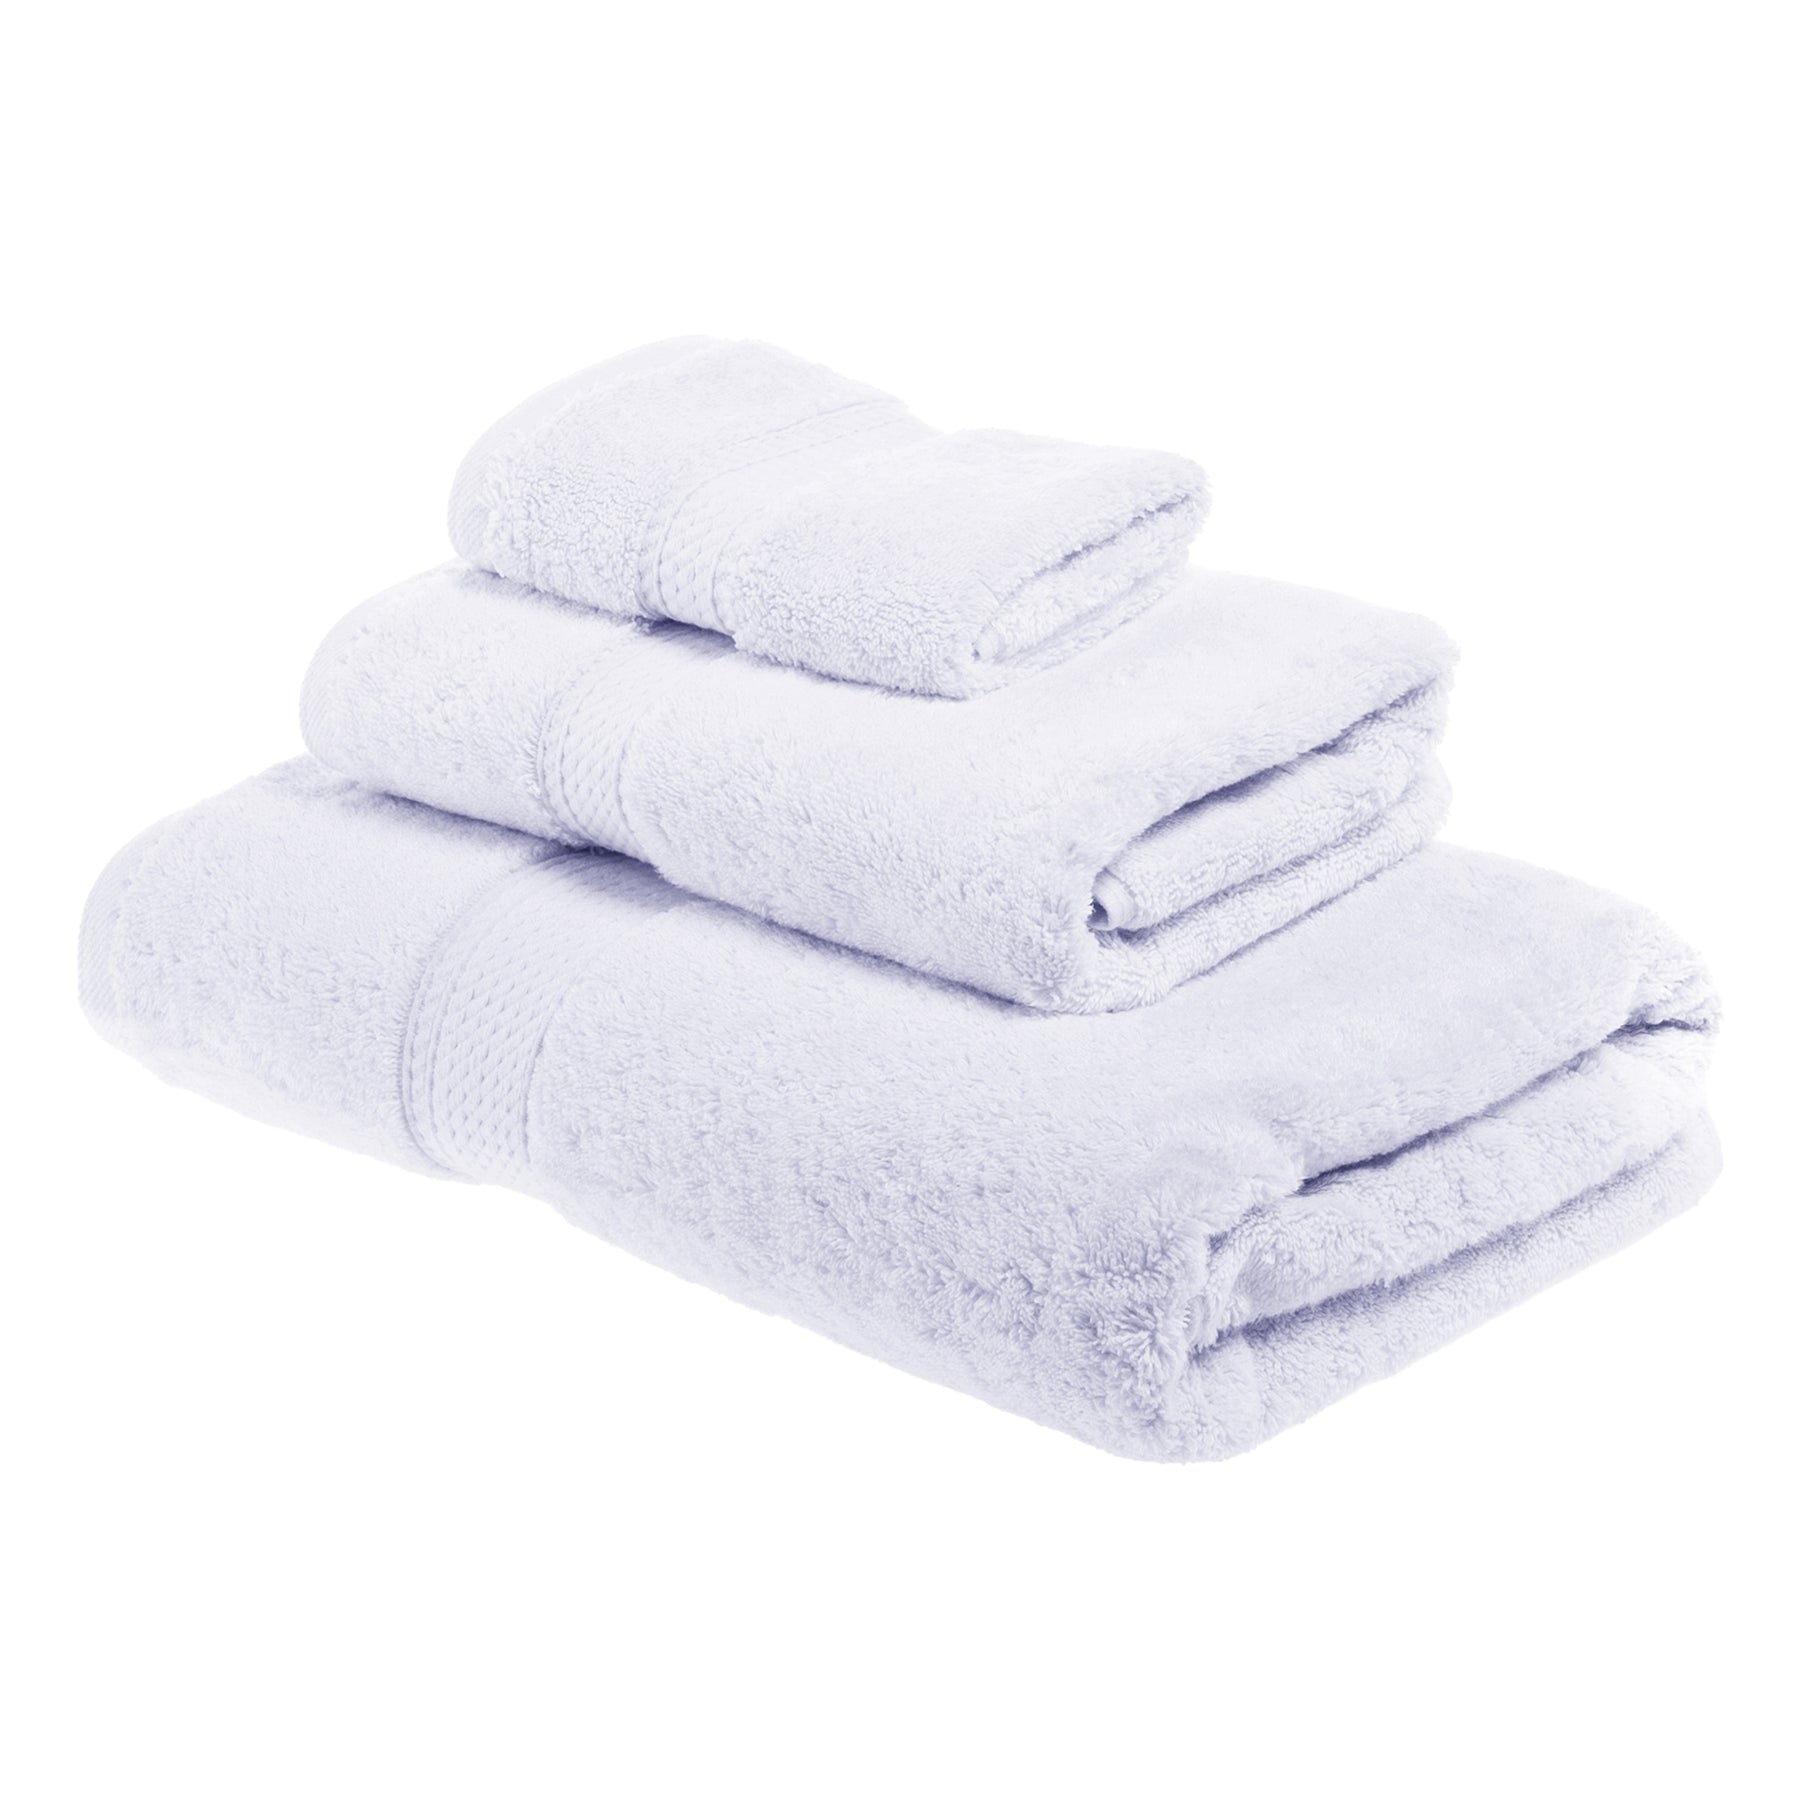 Superior 900 GSM Egyptian Cotton 10-Piece Towel Set on sale at shophq.com -  491-217